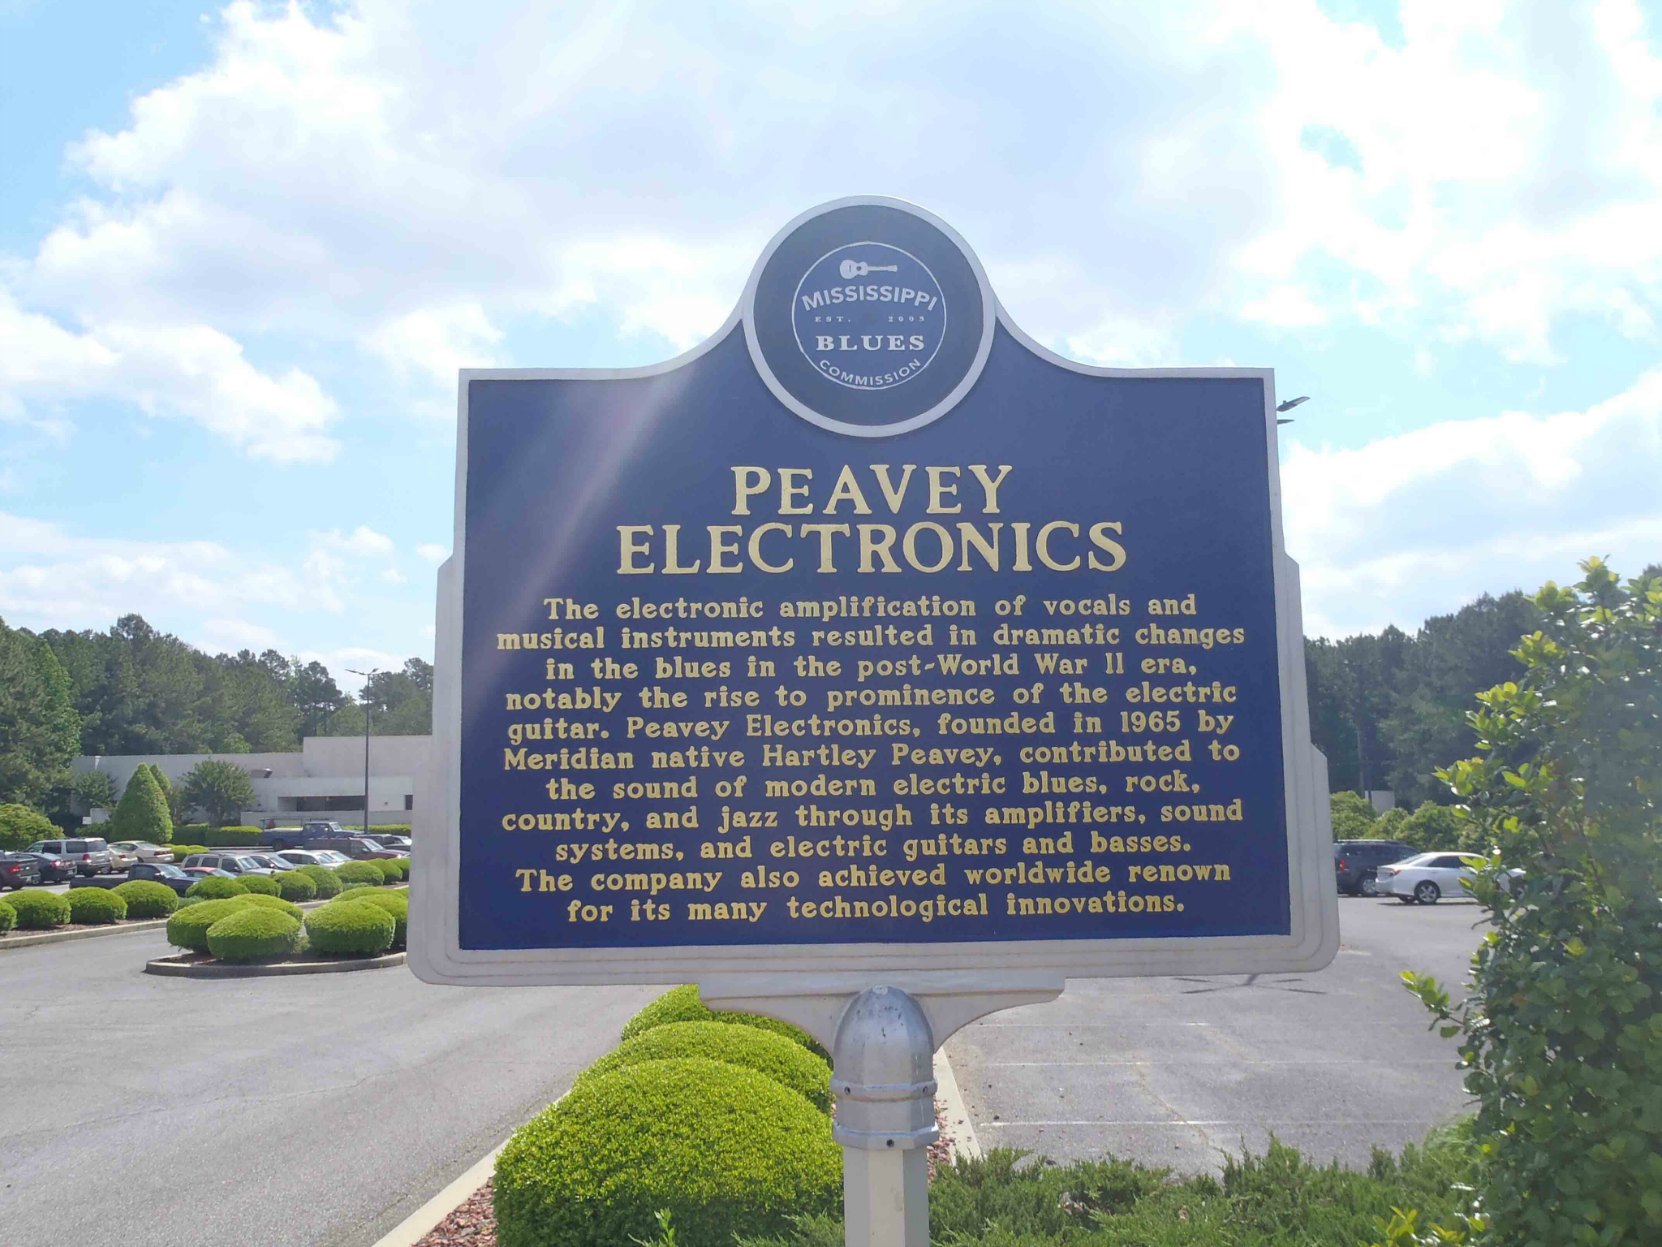 Mississippi Blues Trail marker at Peavey Electronics, Meridian, Mississippi